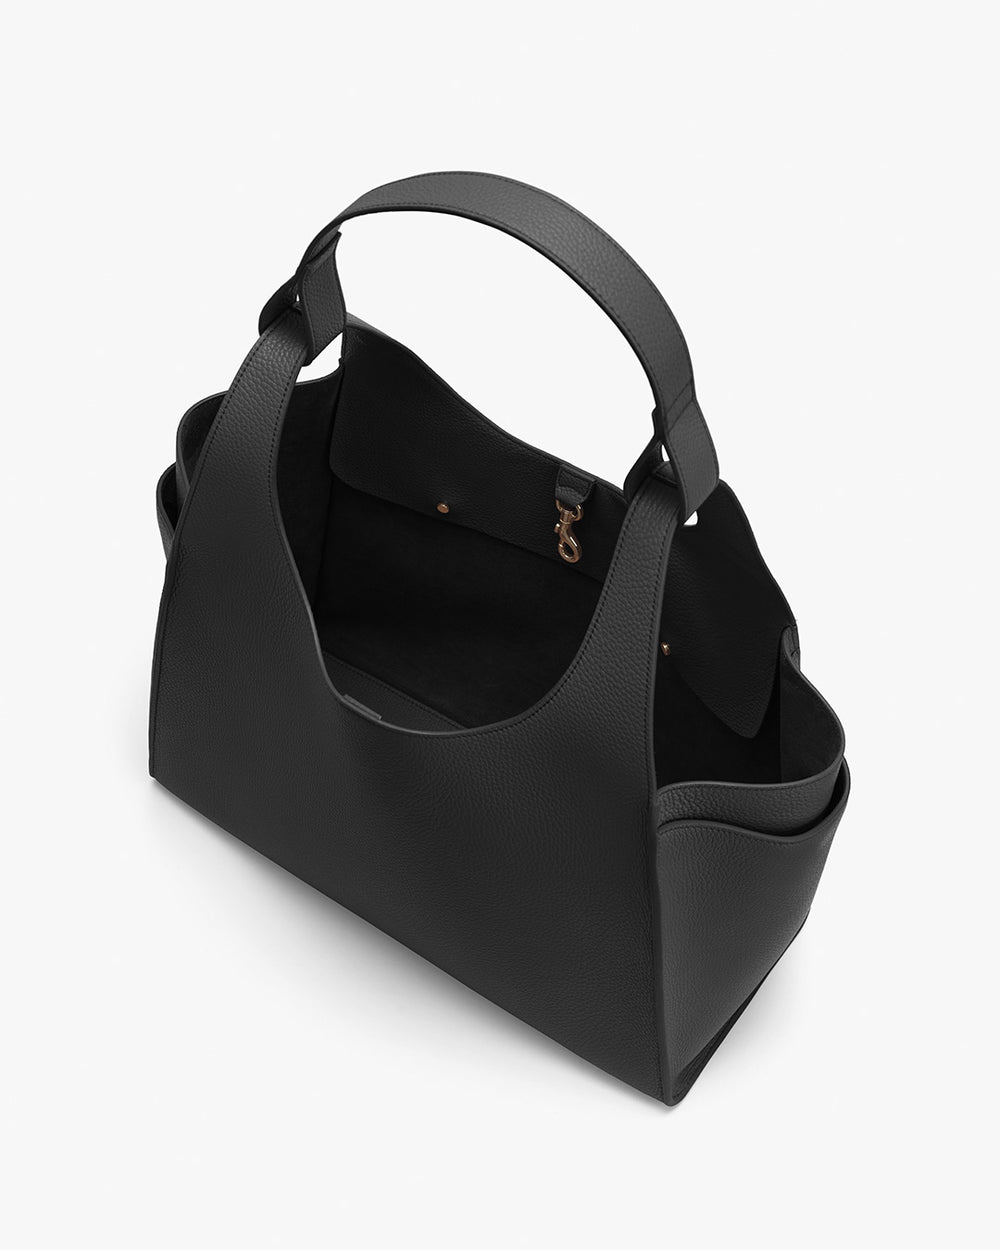 Handbag with open top and twin handles.